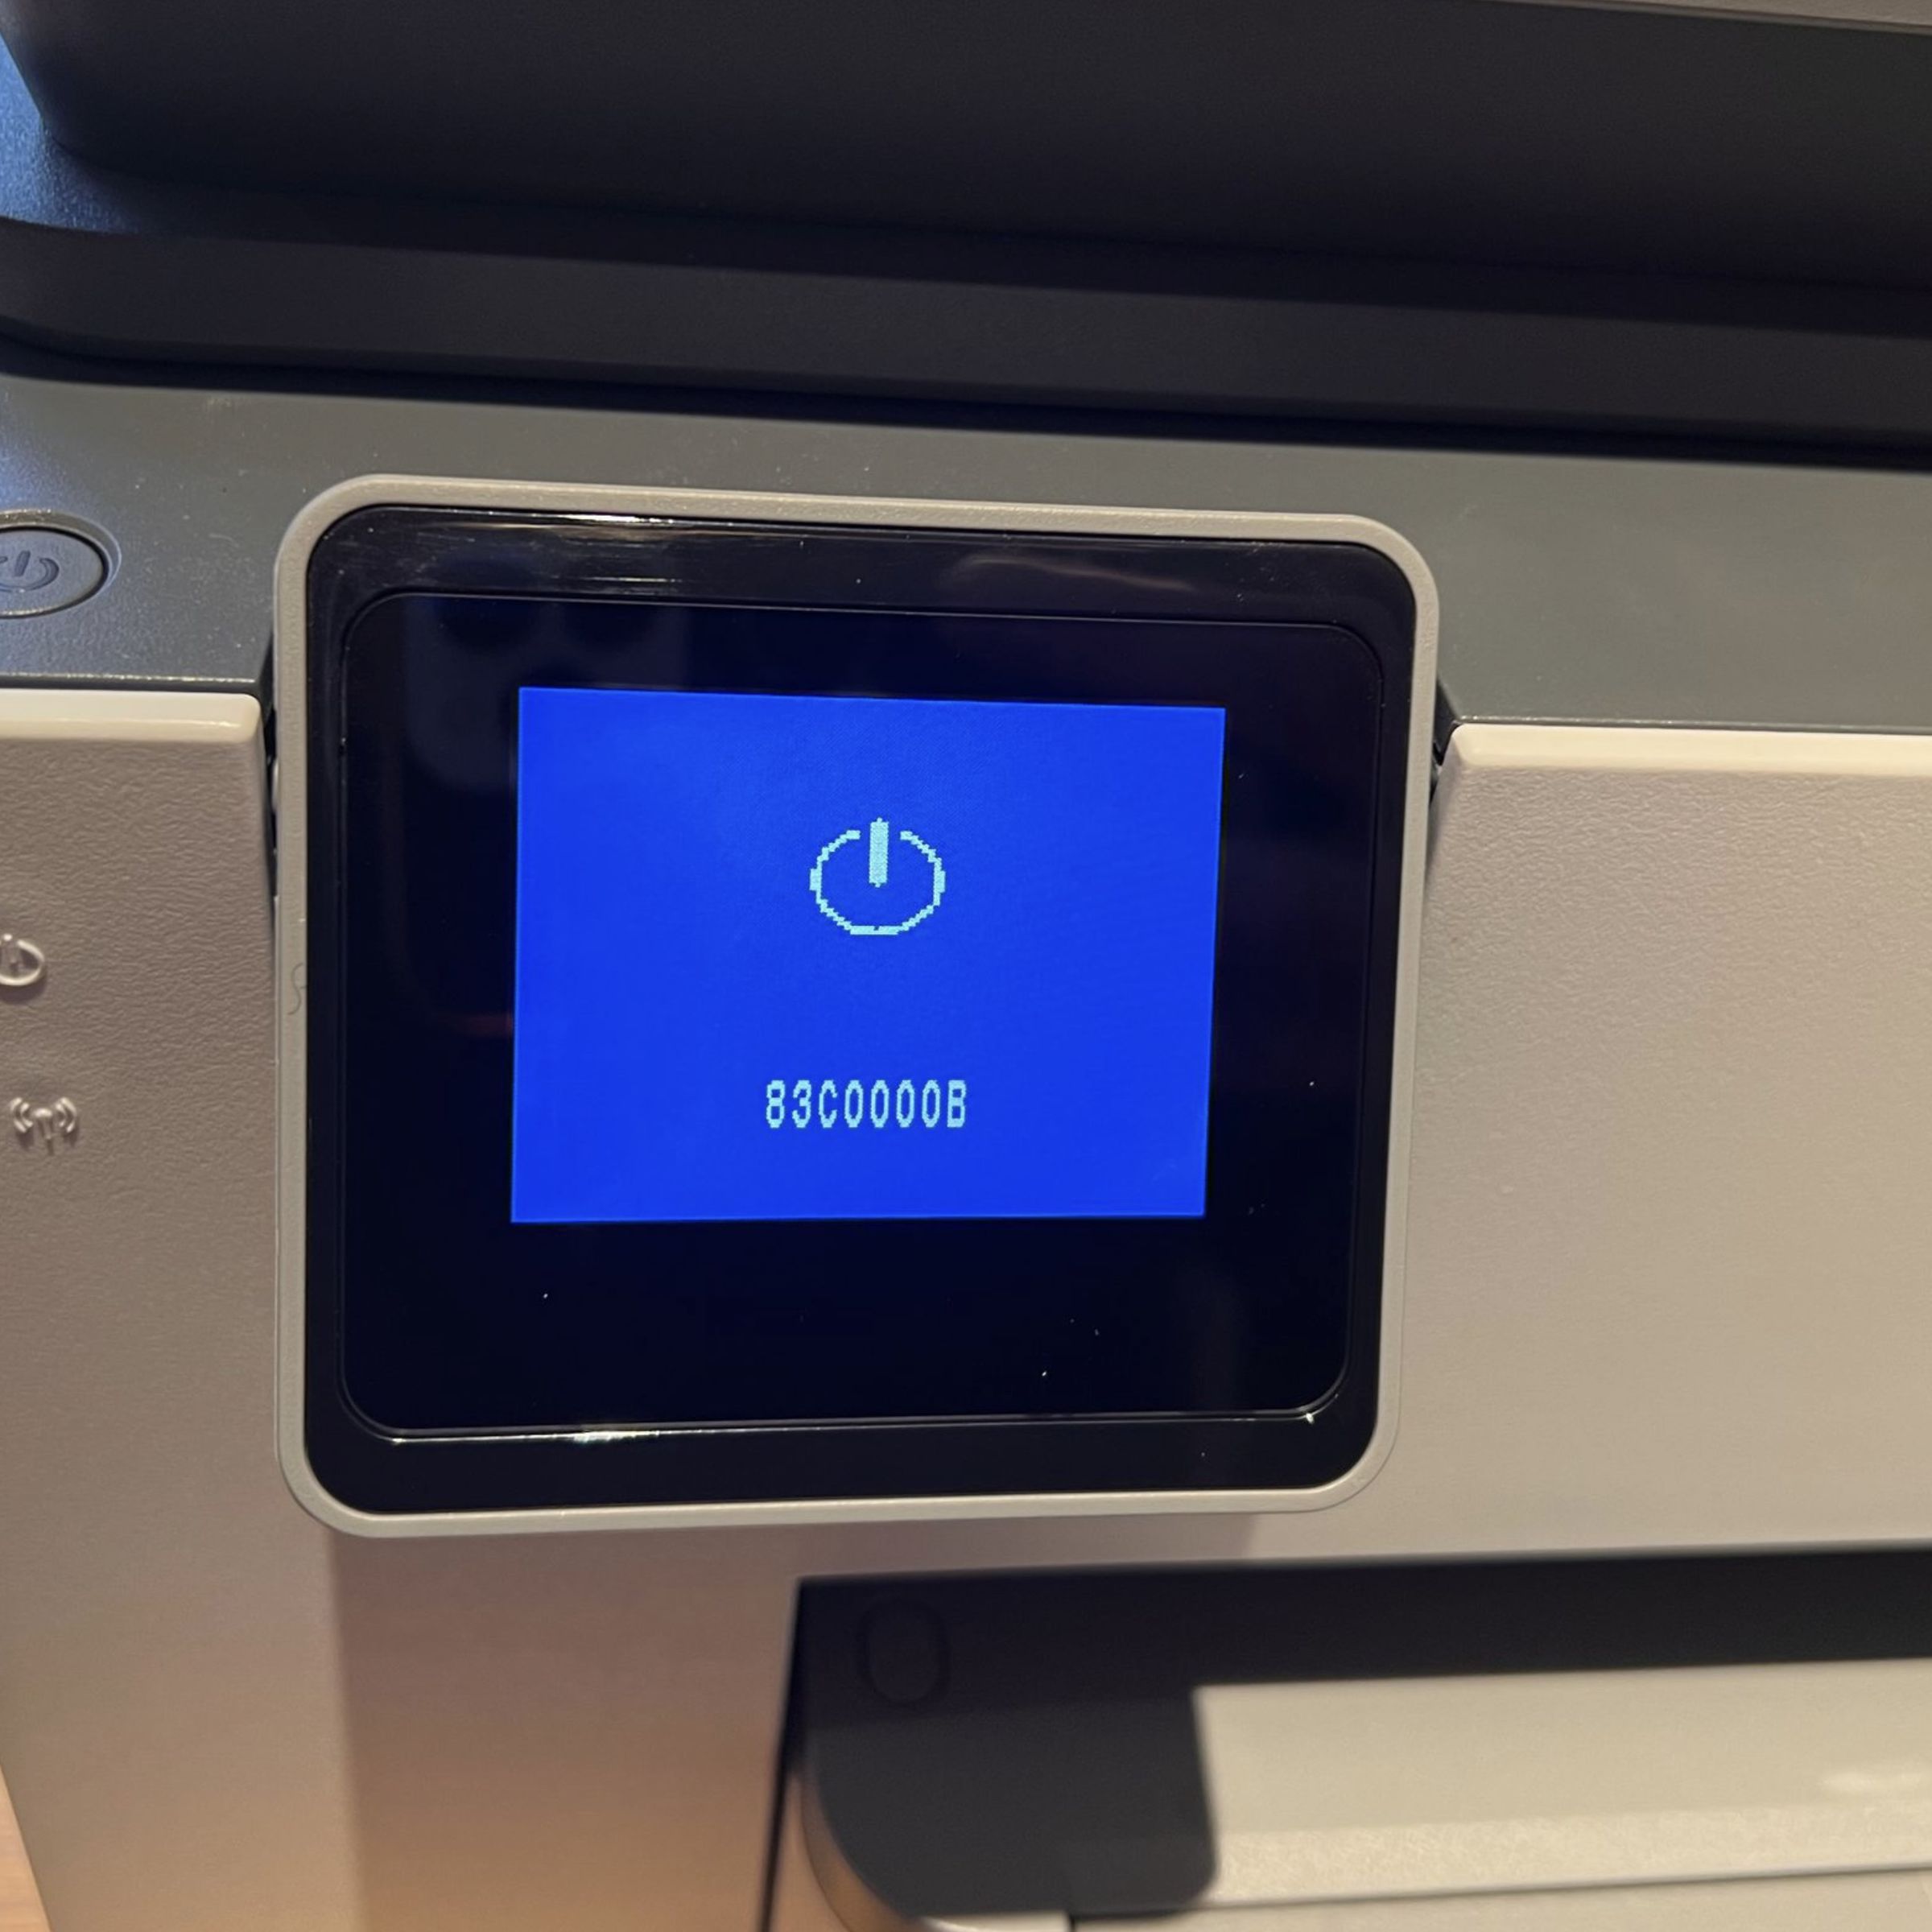 Error code “83C0000B” on the printer’s touchscreen